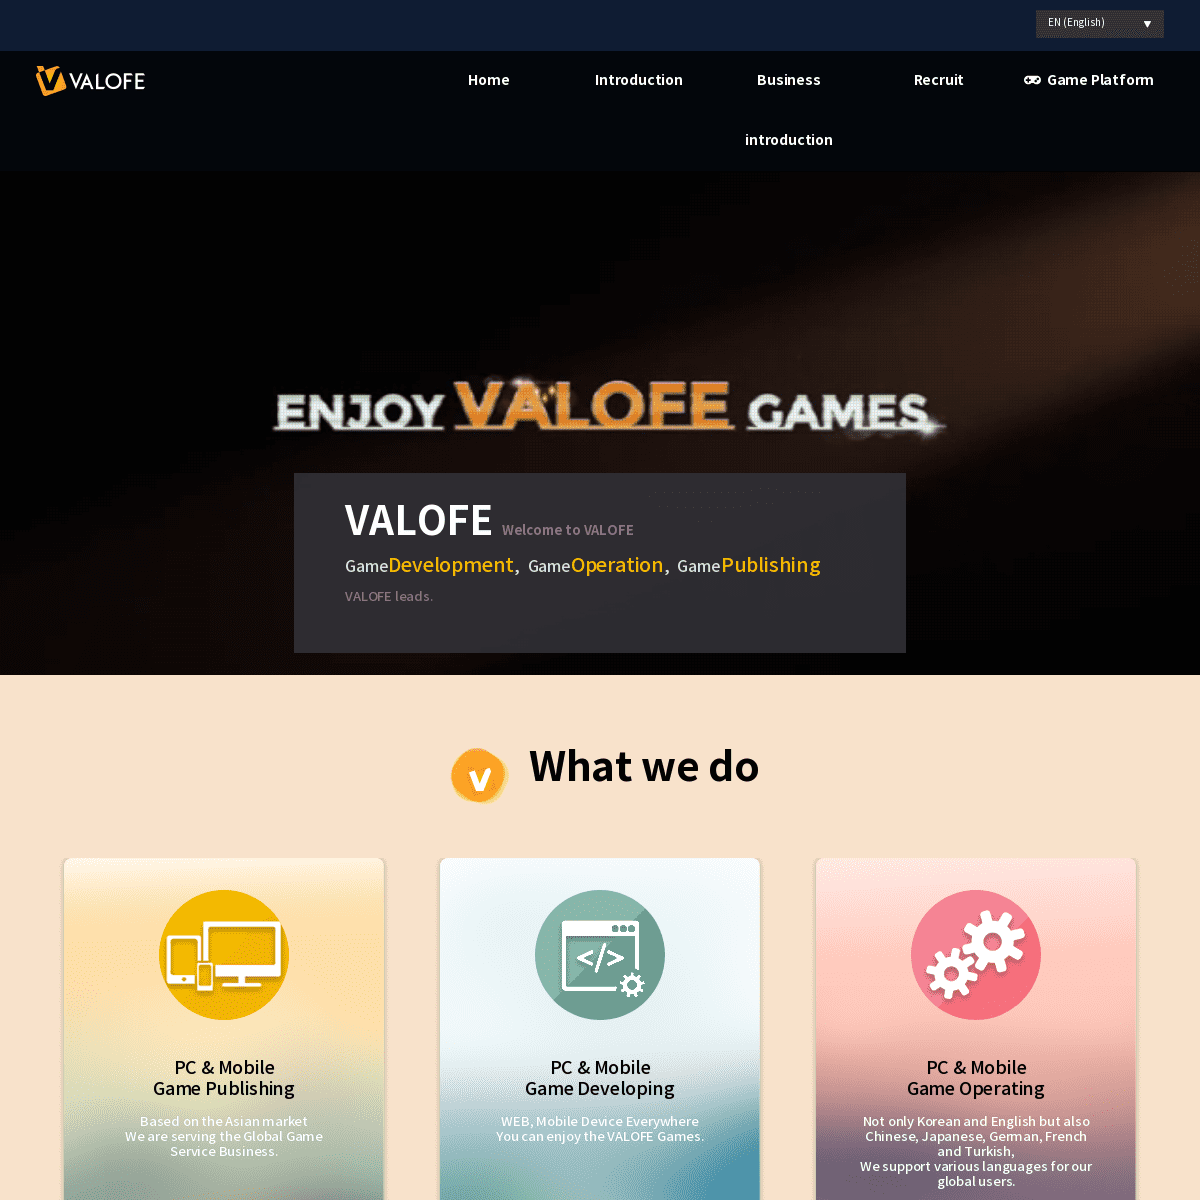 A complete backup of valofe.com